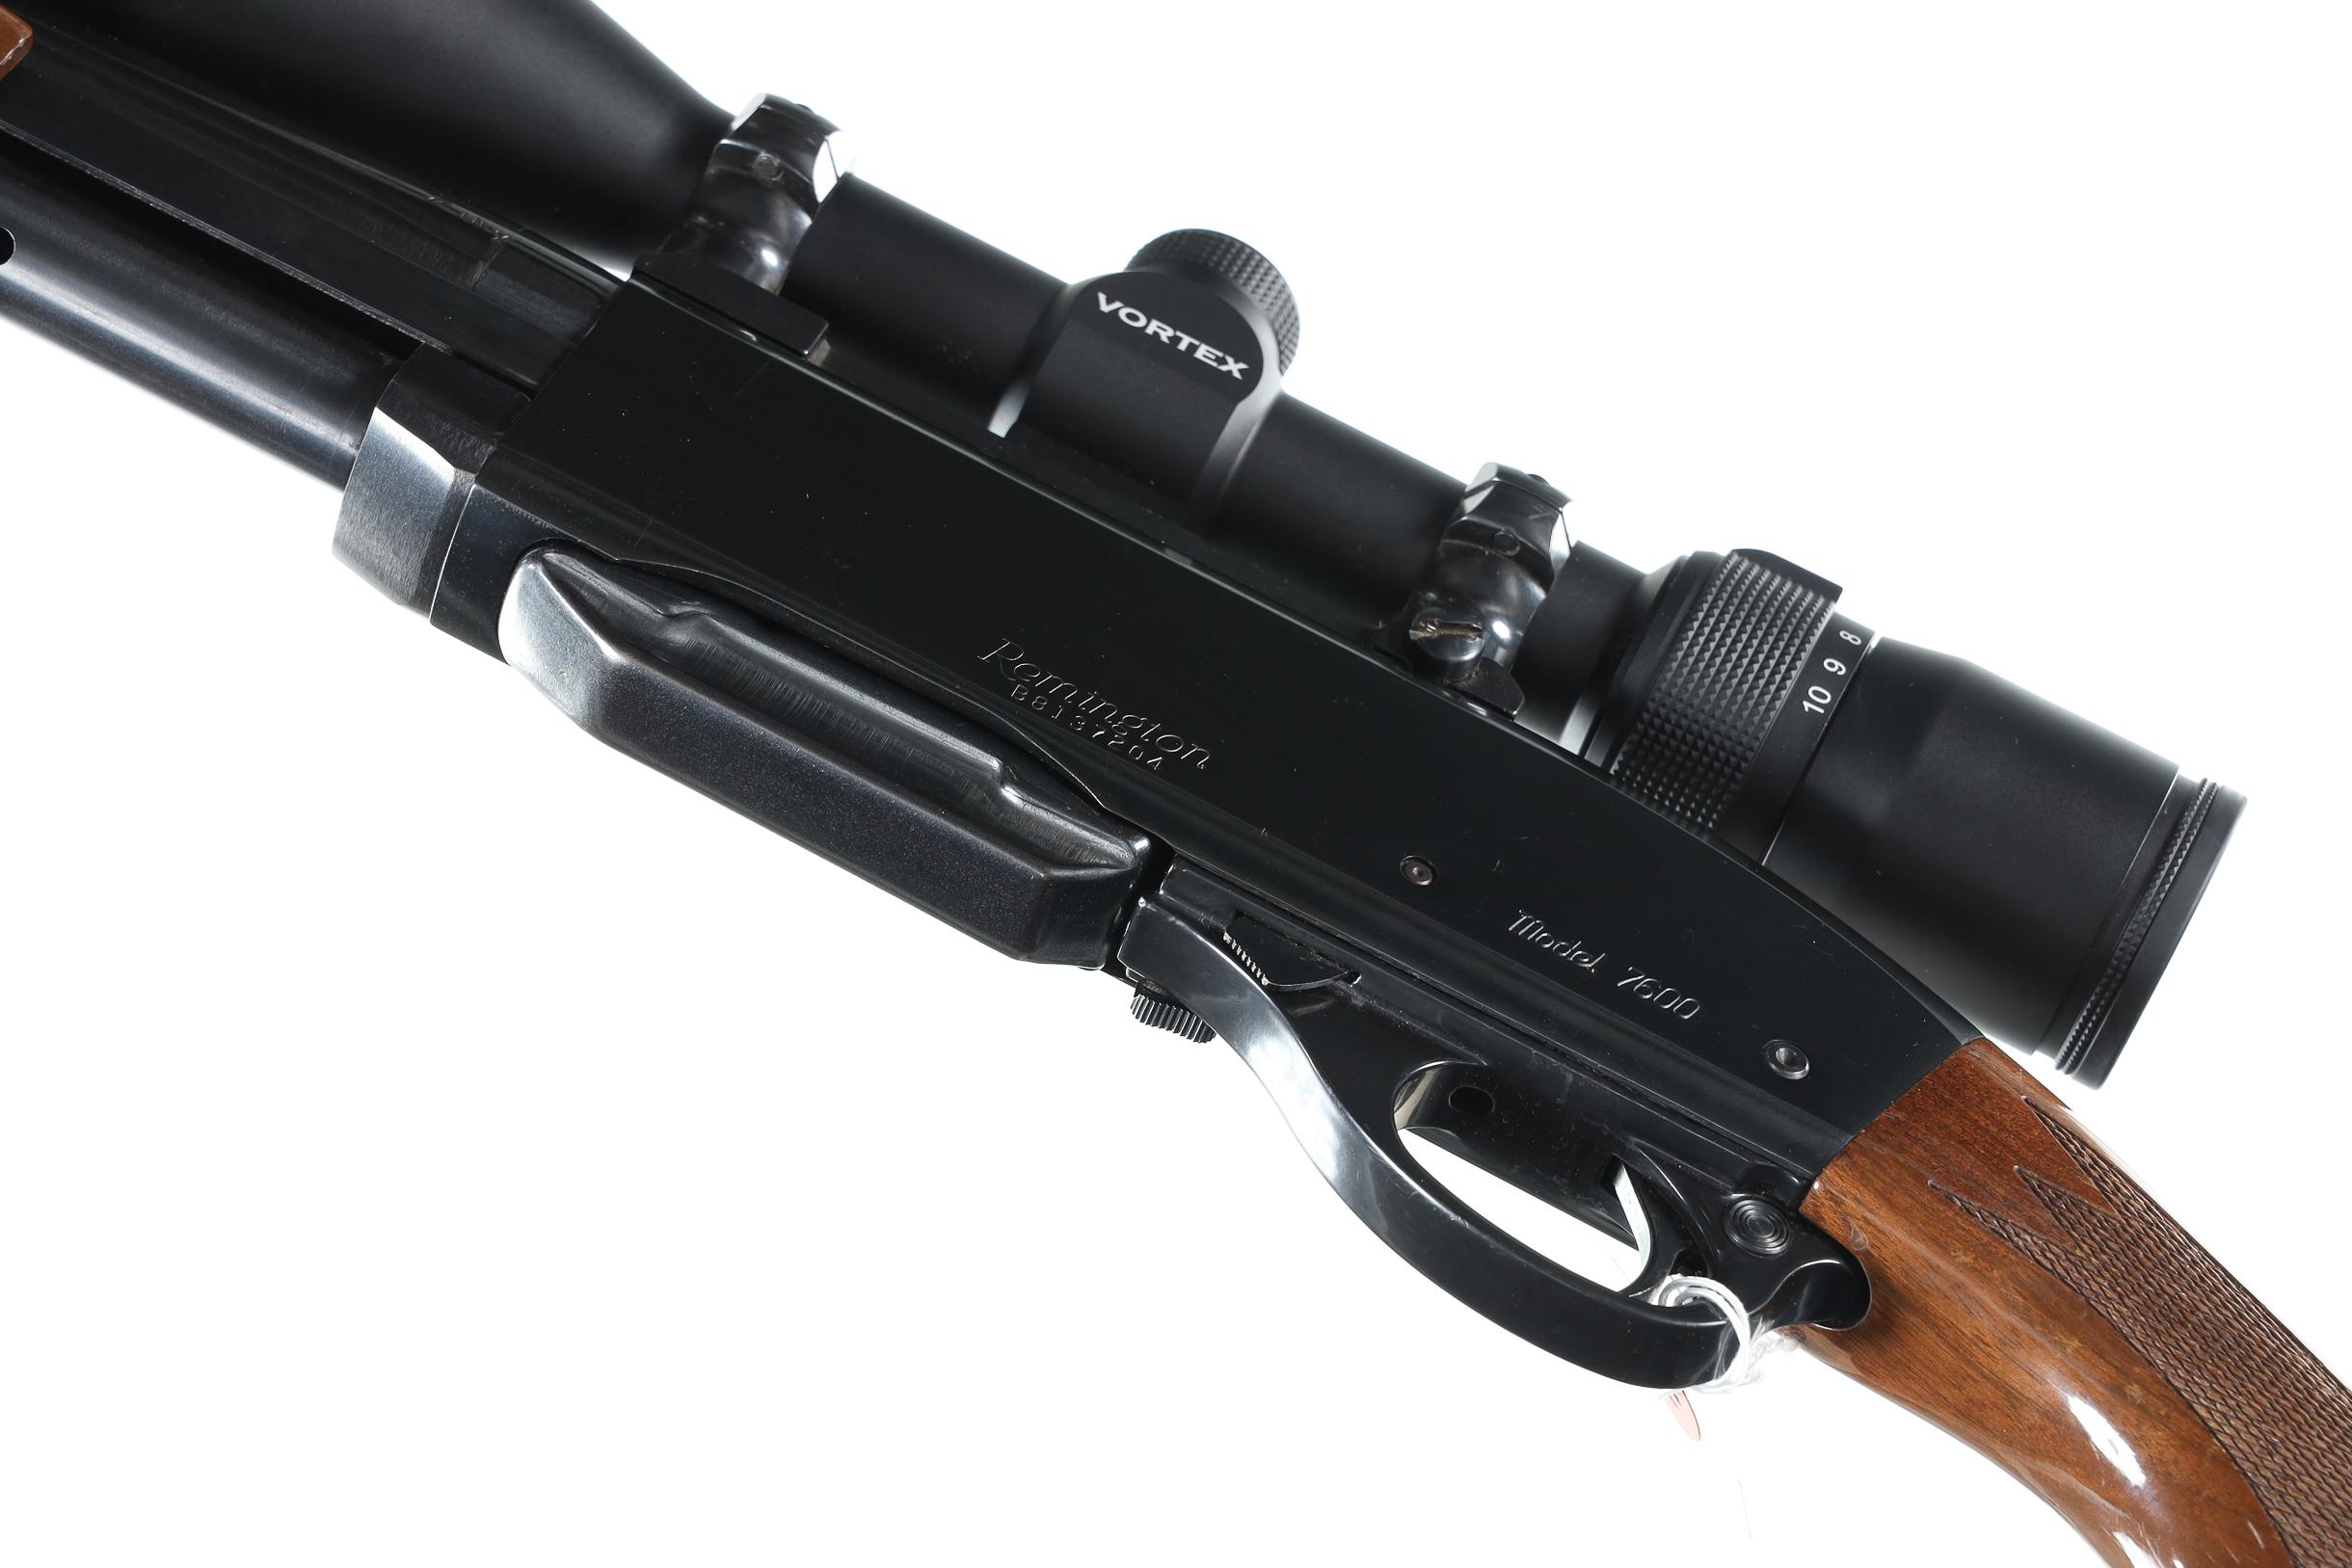 Remington 7600 Slide Rifle 7mm-08